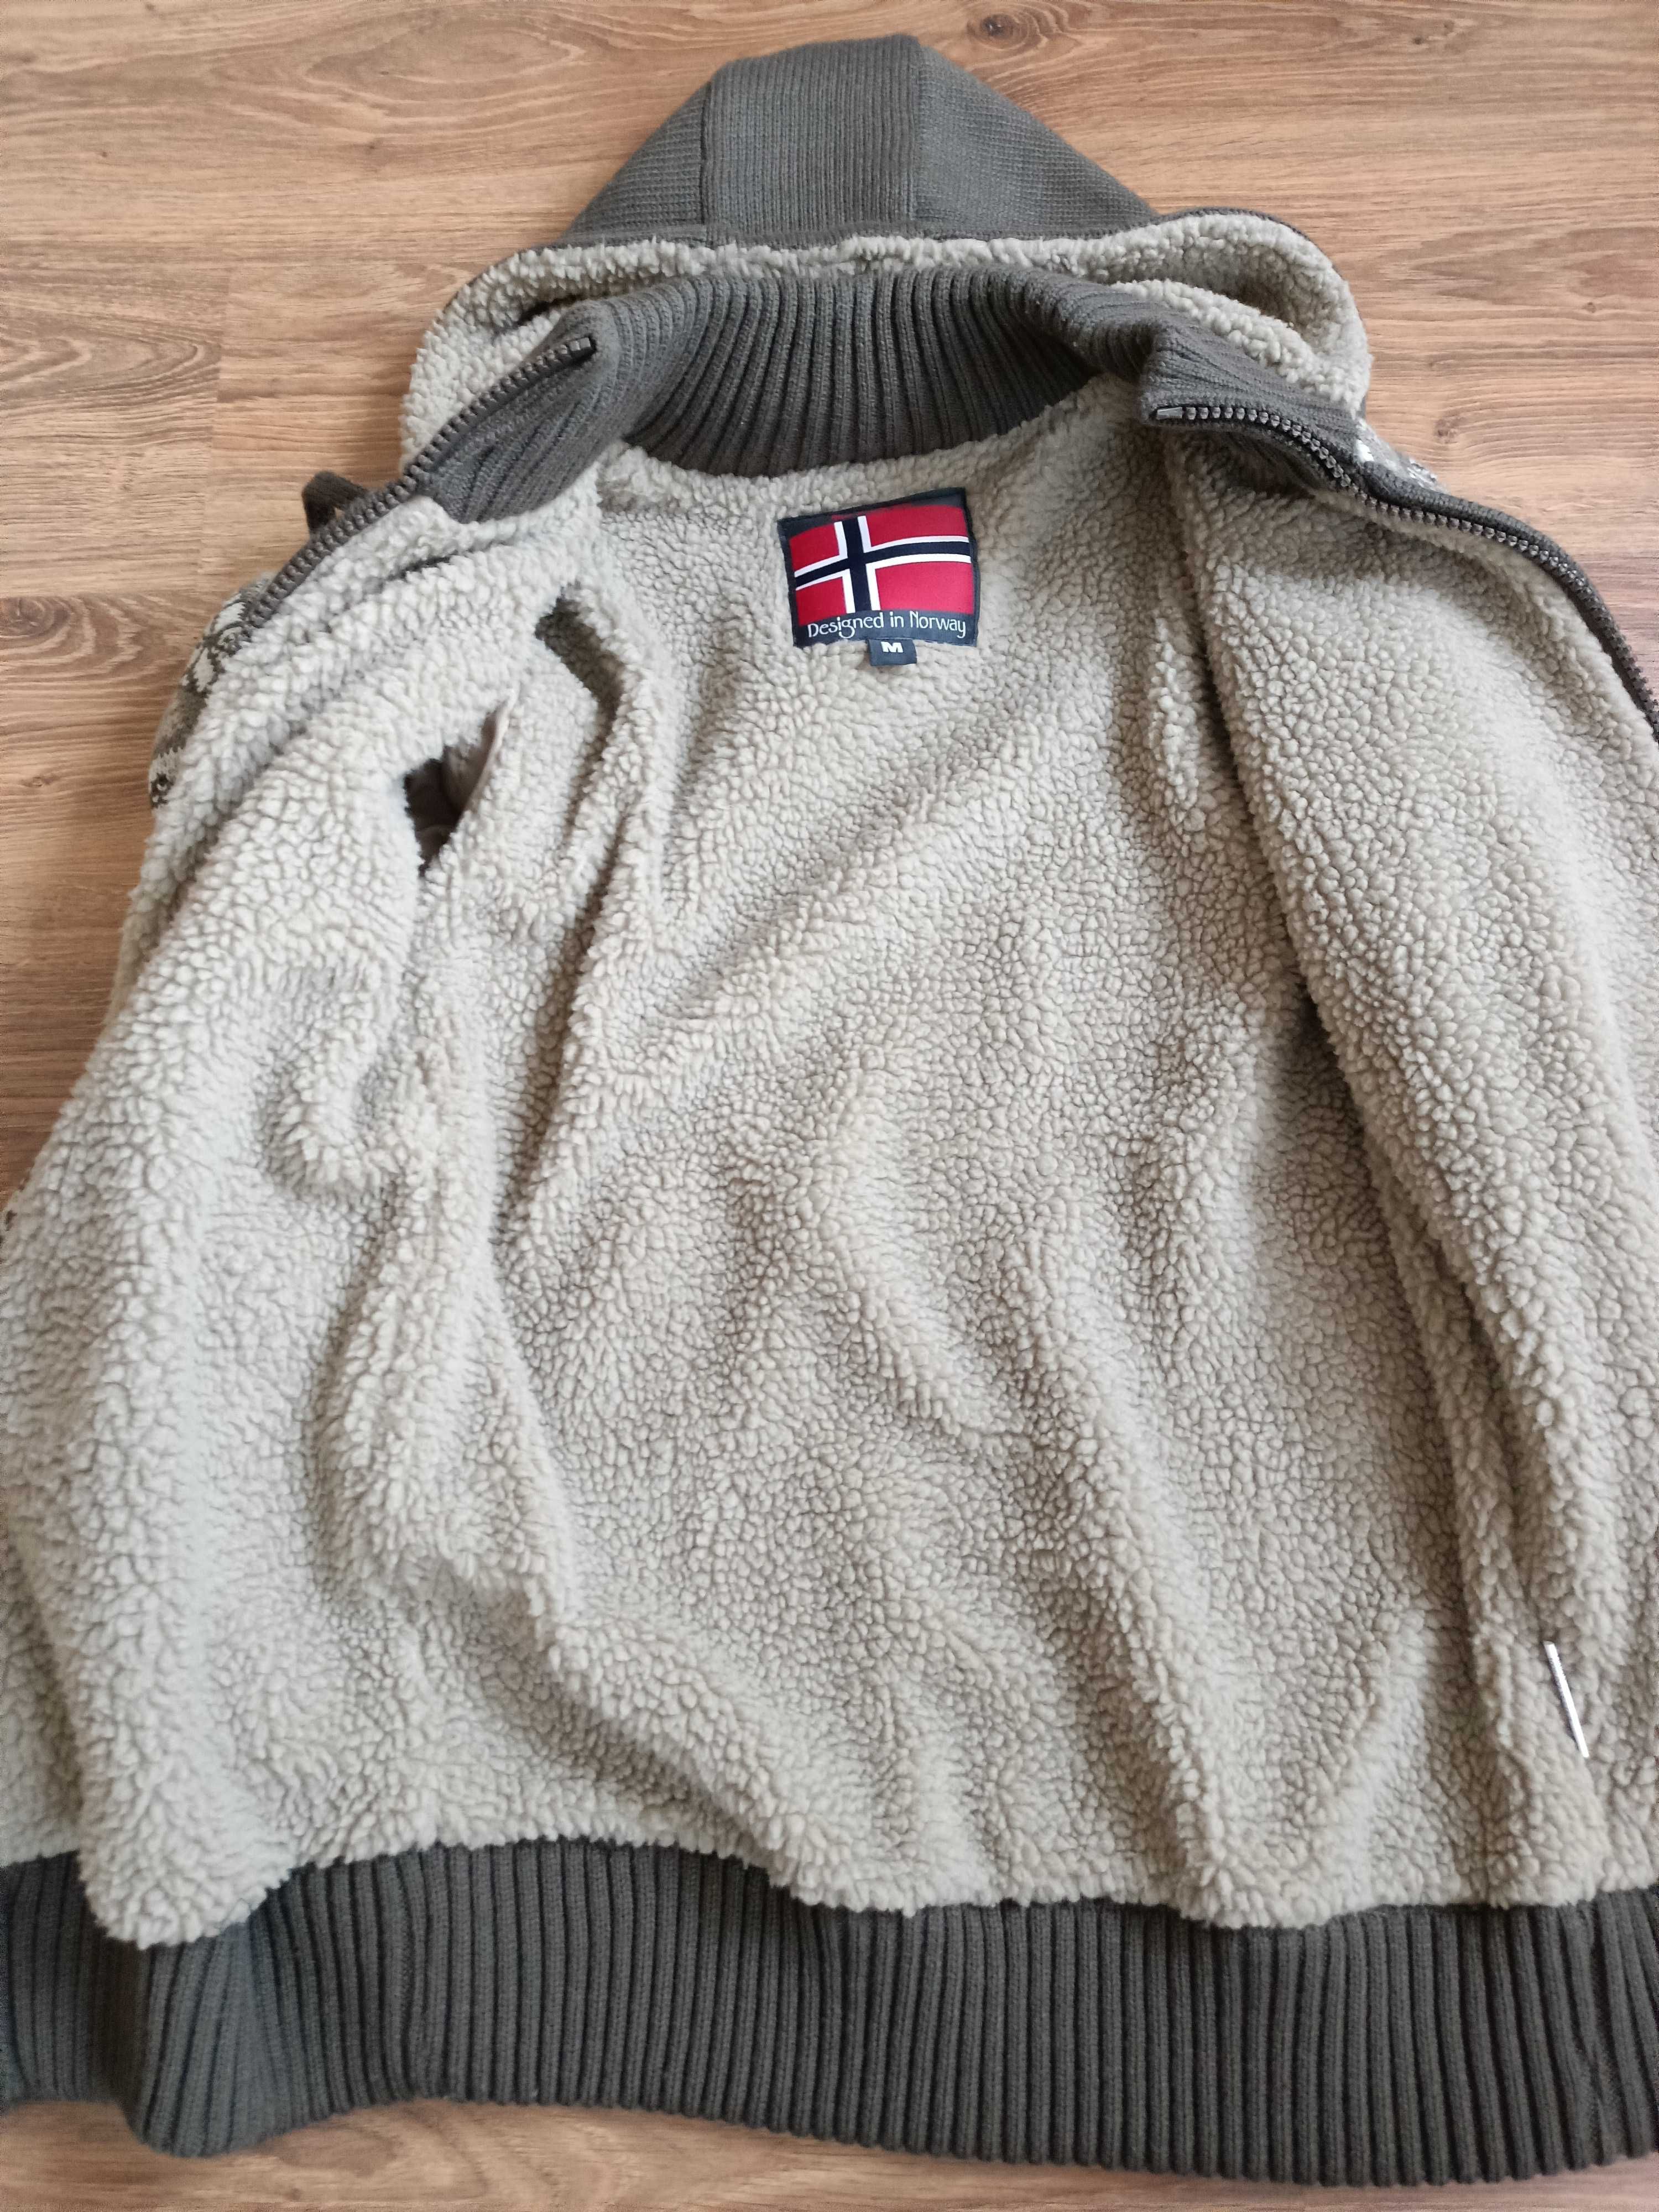 Męski sweter norweski wzór roz. M - góralski